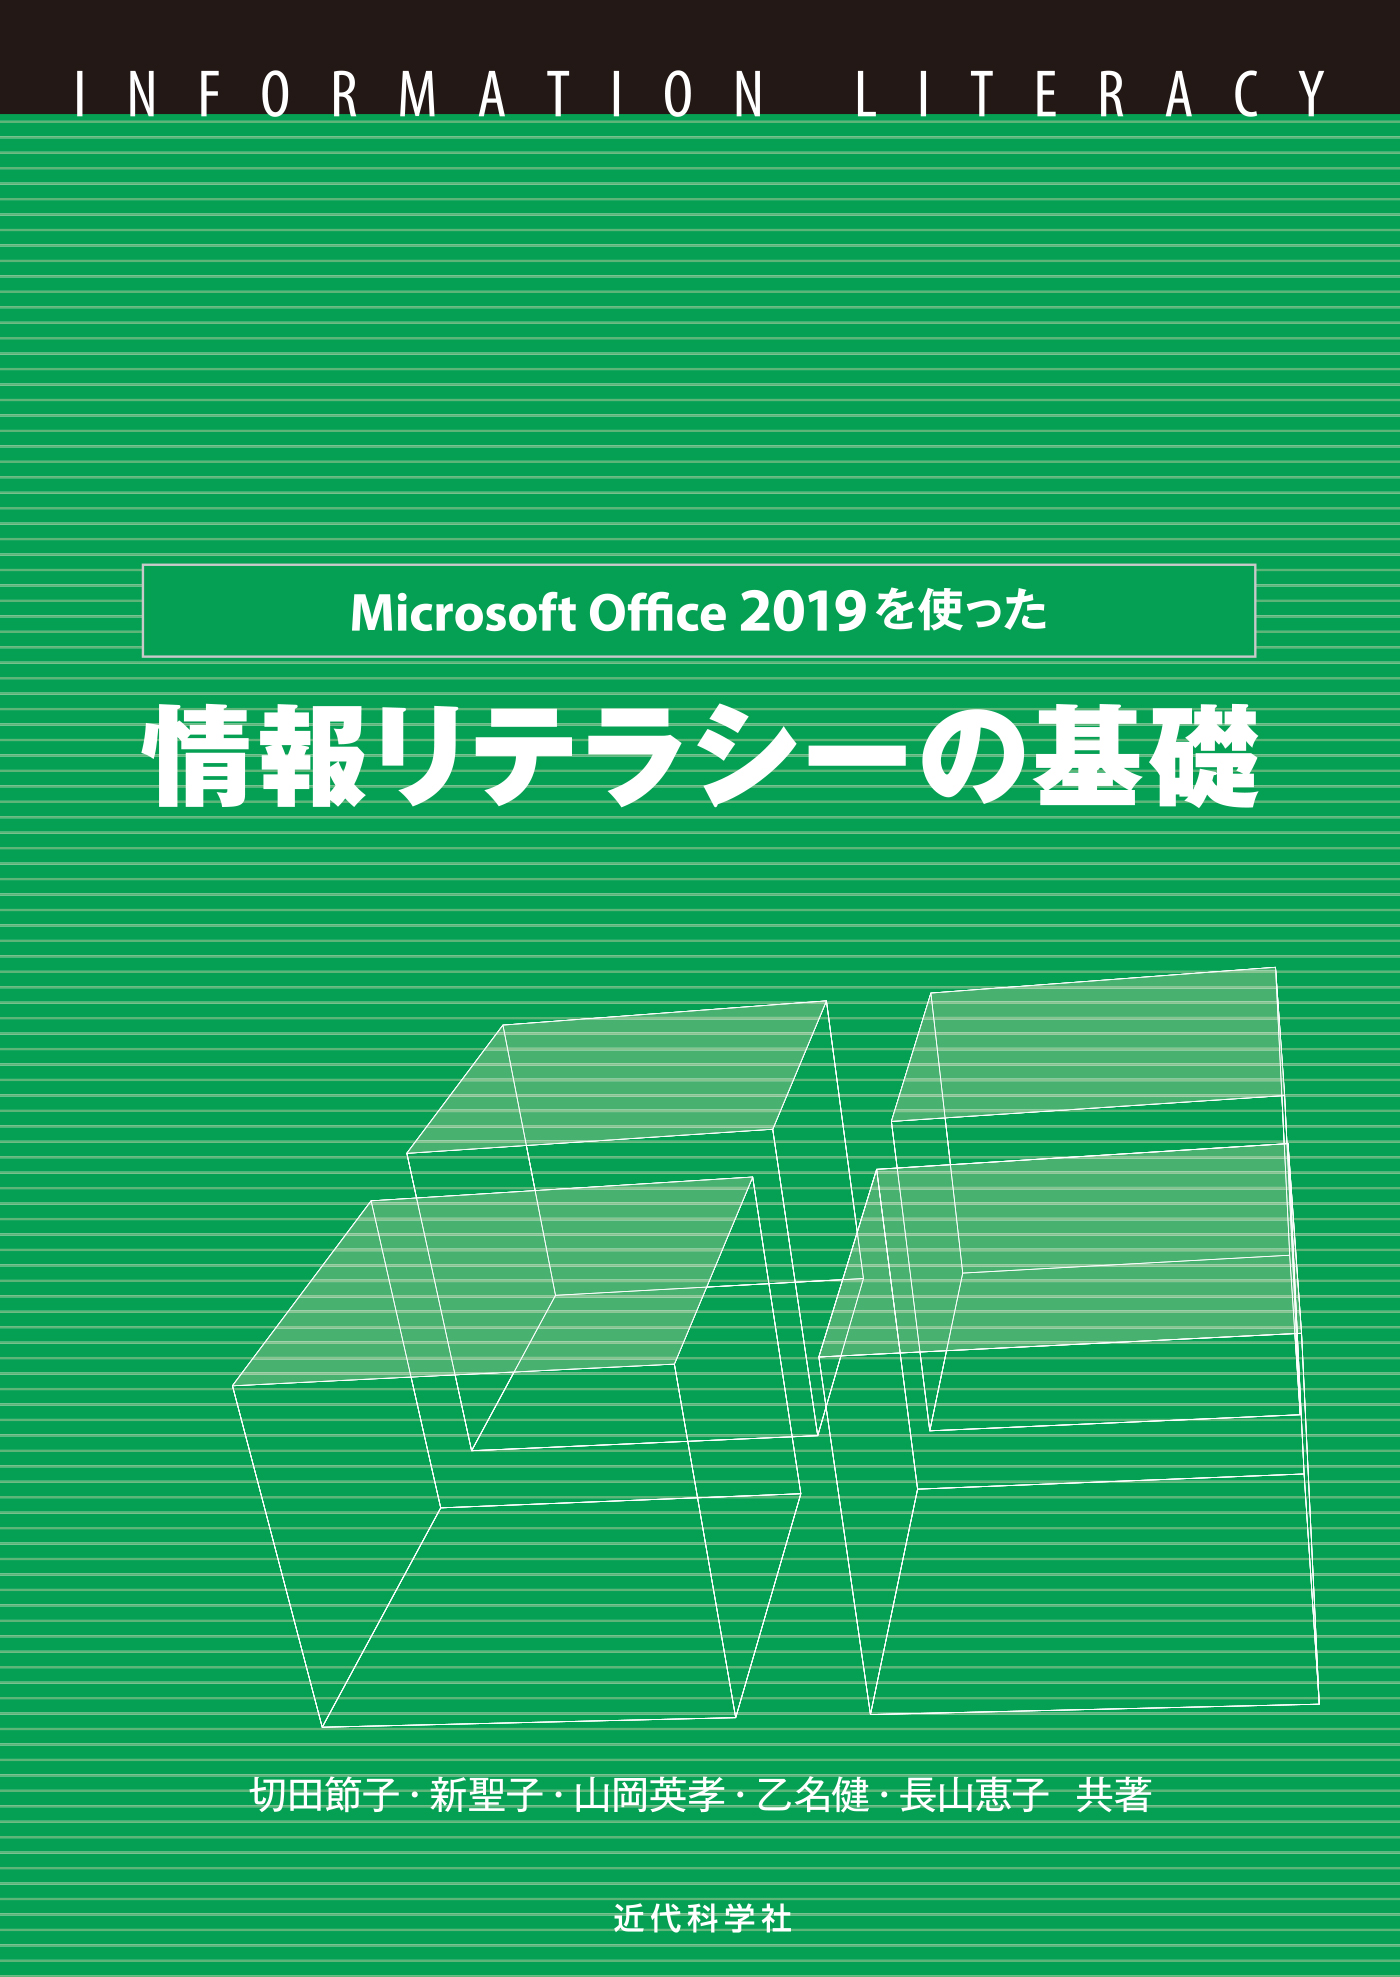 MicrosoftOffice2019を使った情報リテラシーの基礎 - 切田節子/新聖子 - 漫画・無料試し読みなら、電子書籍ストア ブックライブ